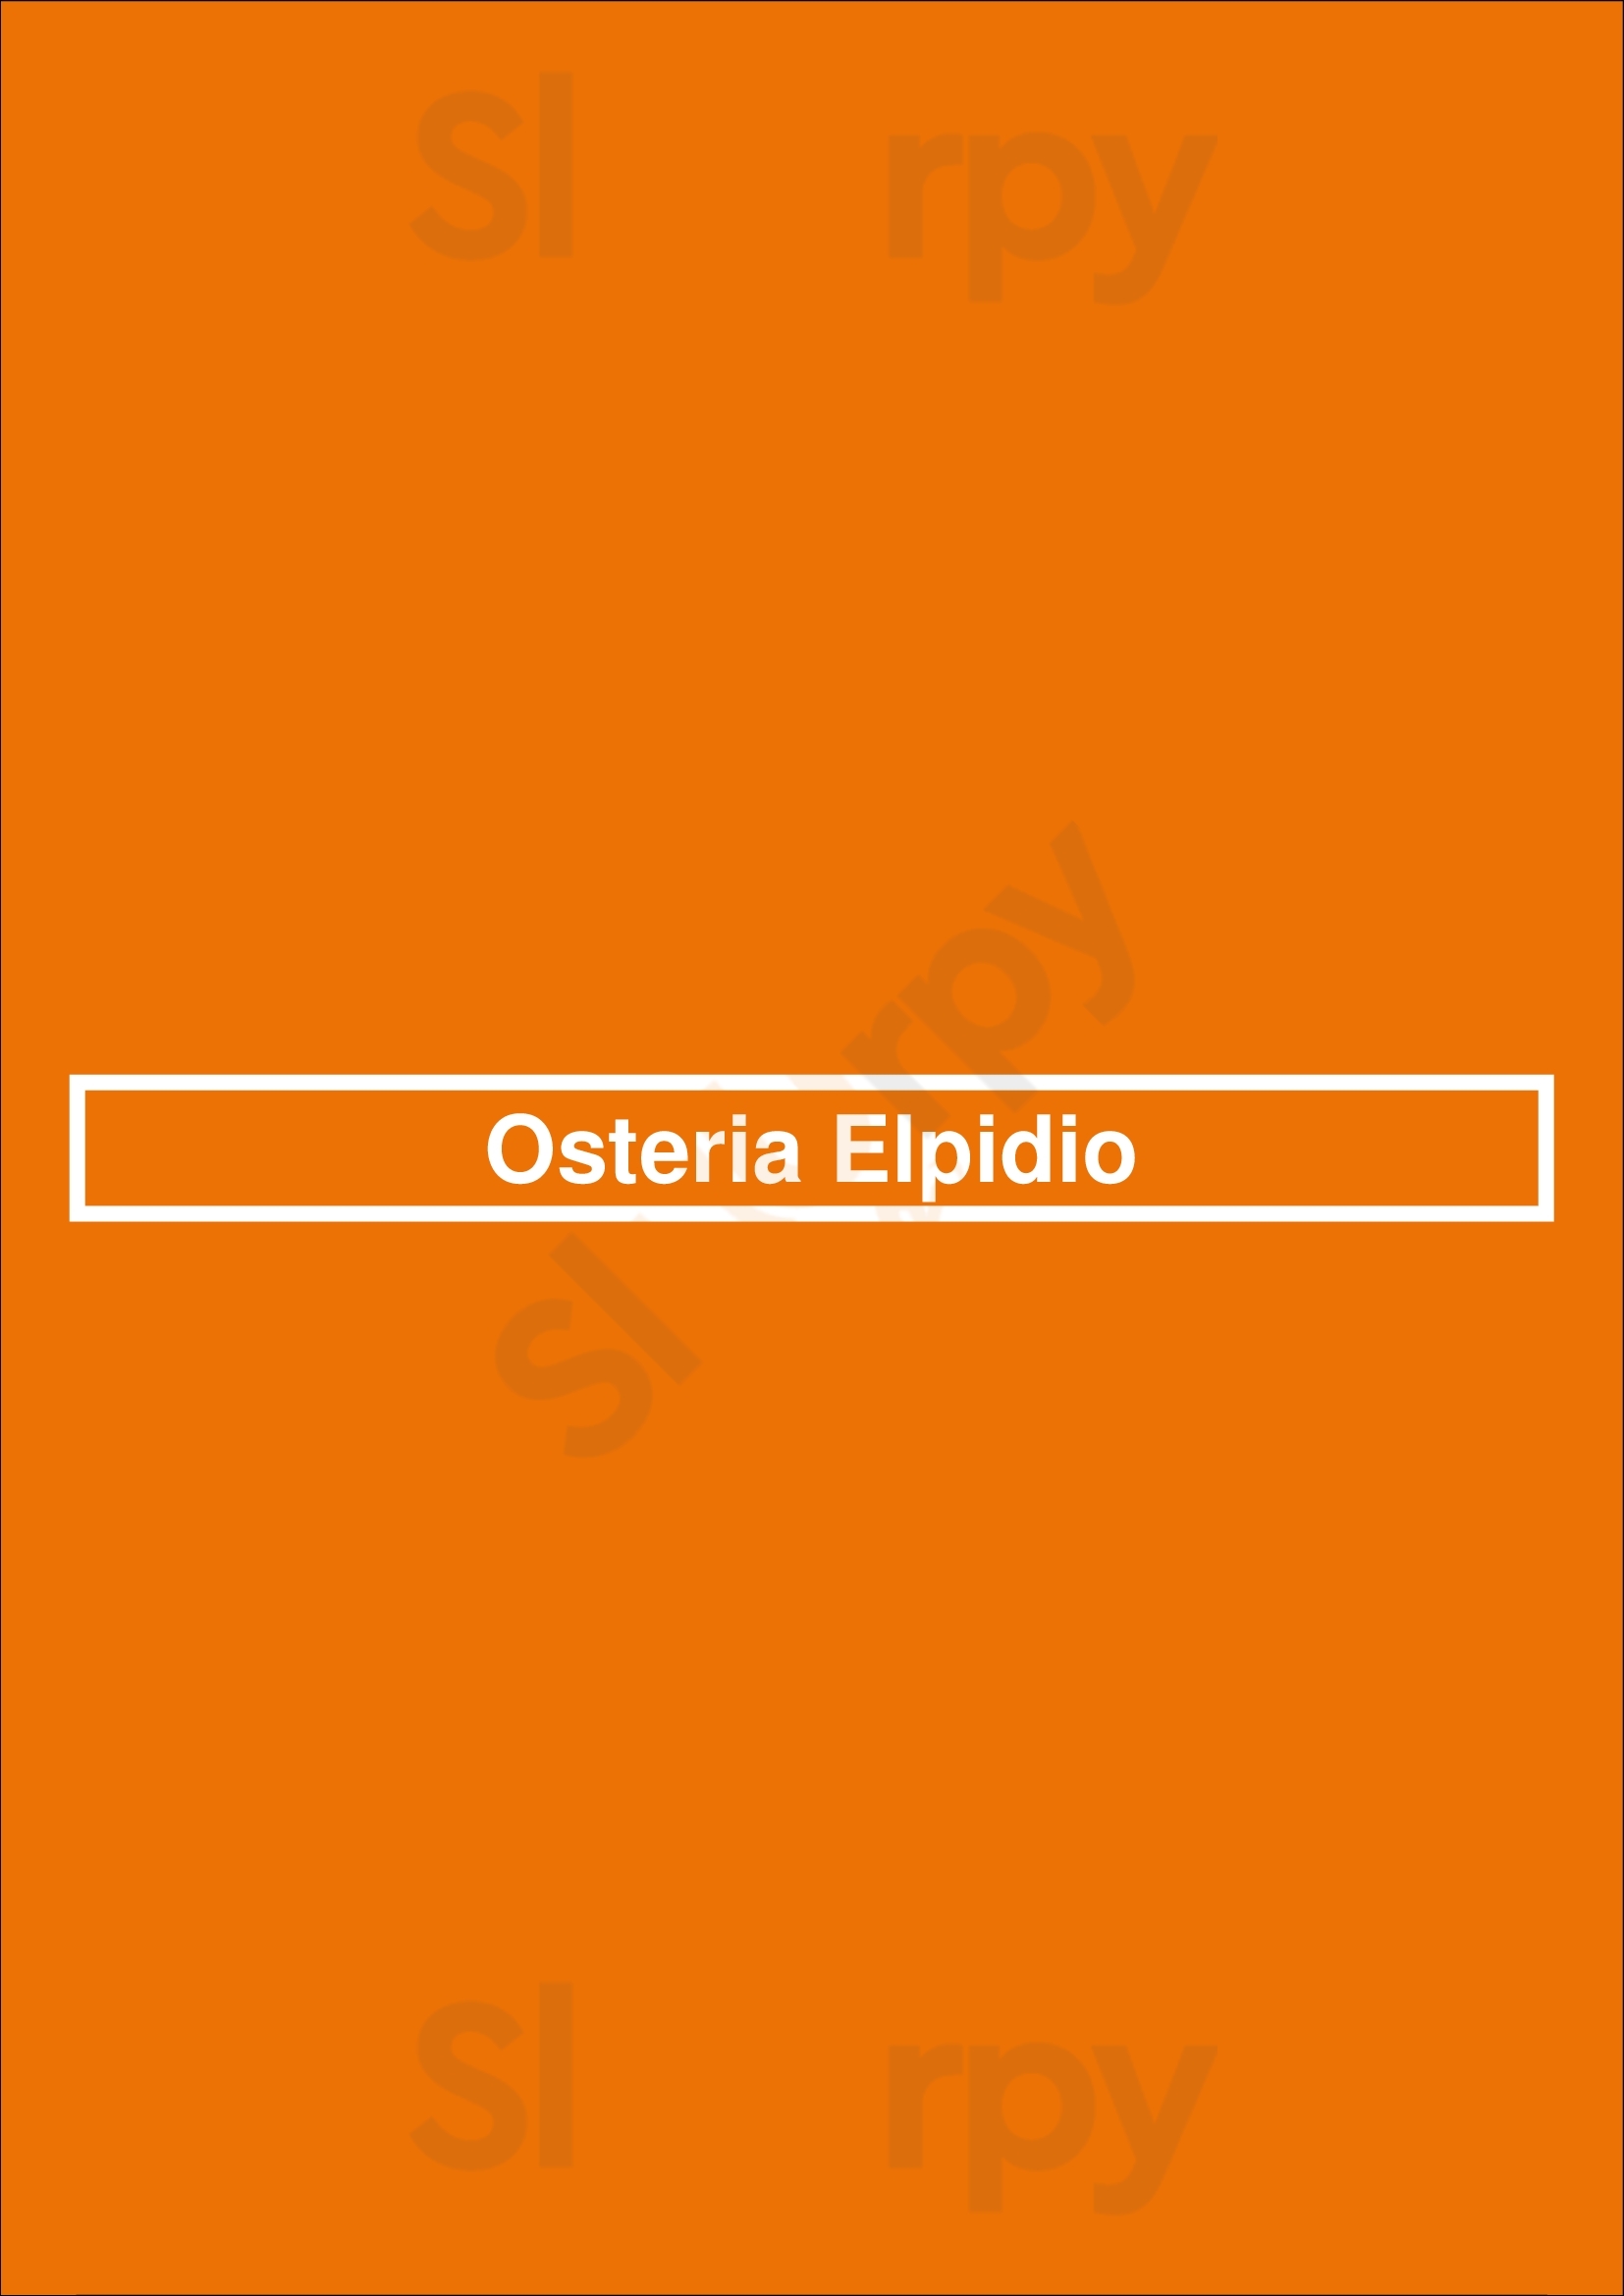 Osteria Elpidio Voorburg Menu - 1